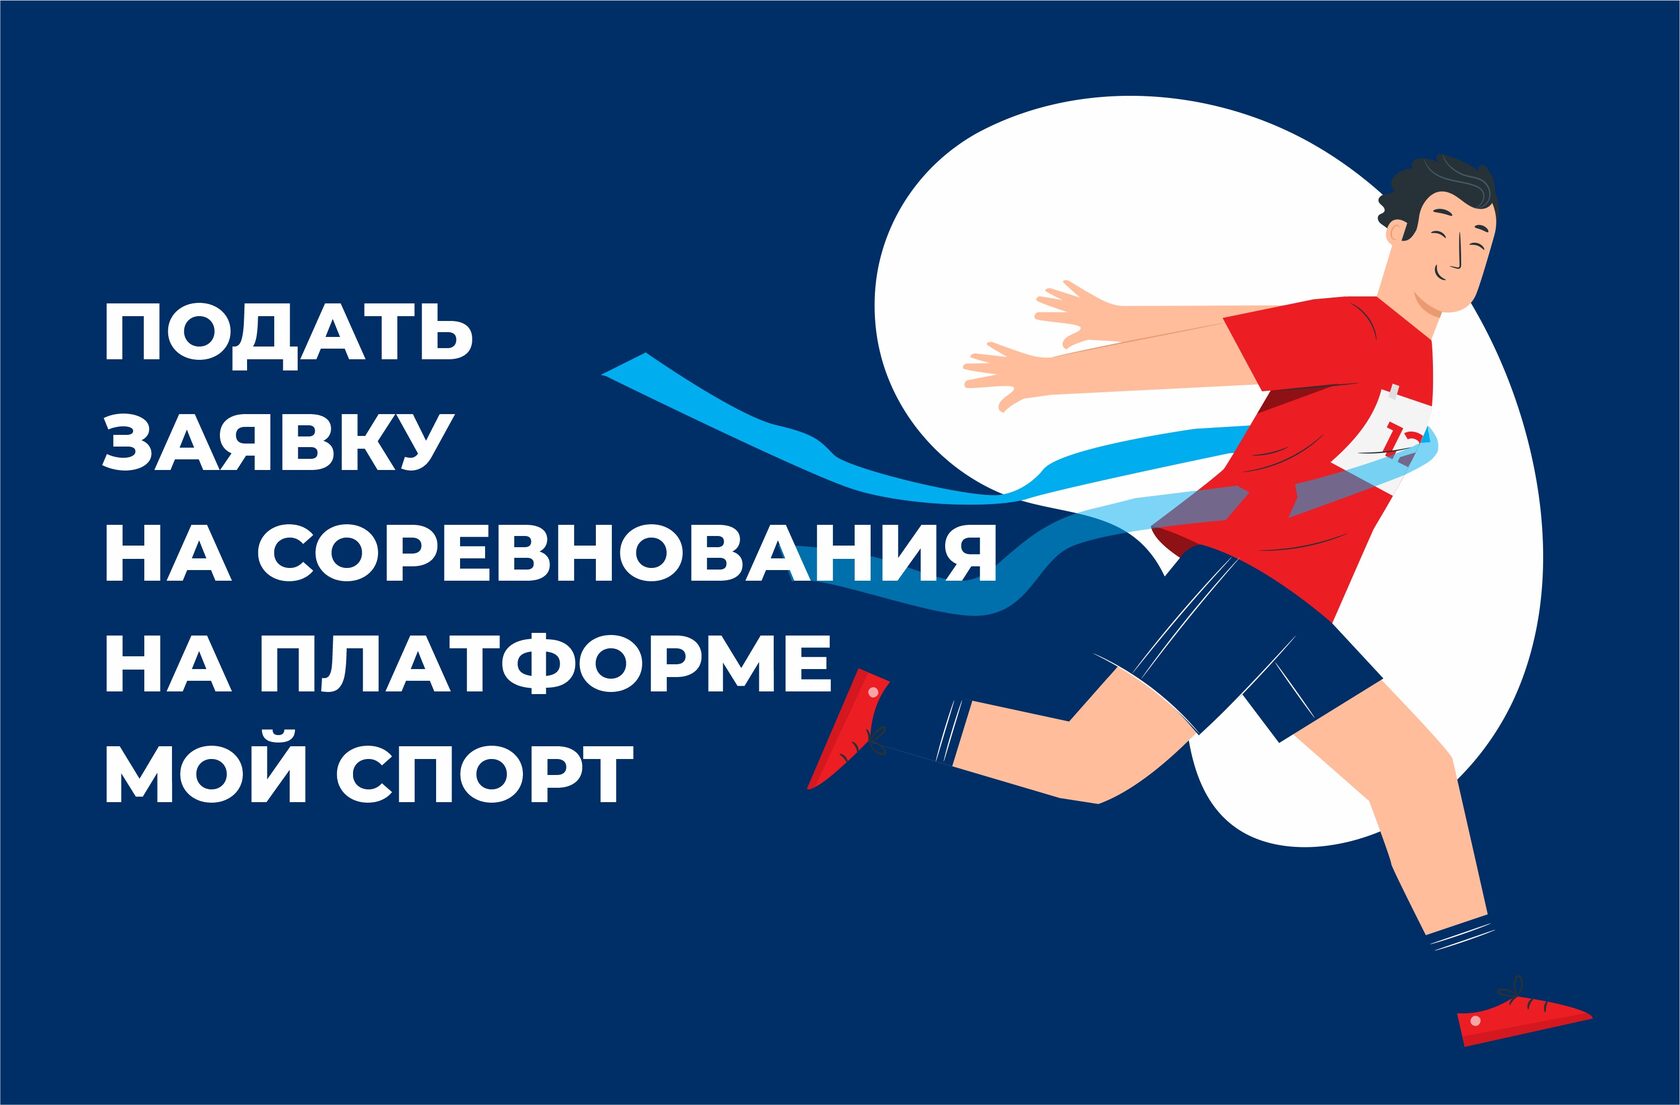 Https moisport ru регистрация. Цифровая платформа мой спорт. АО мой спорт.